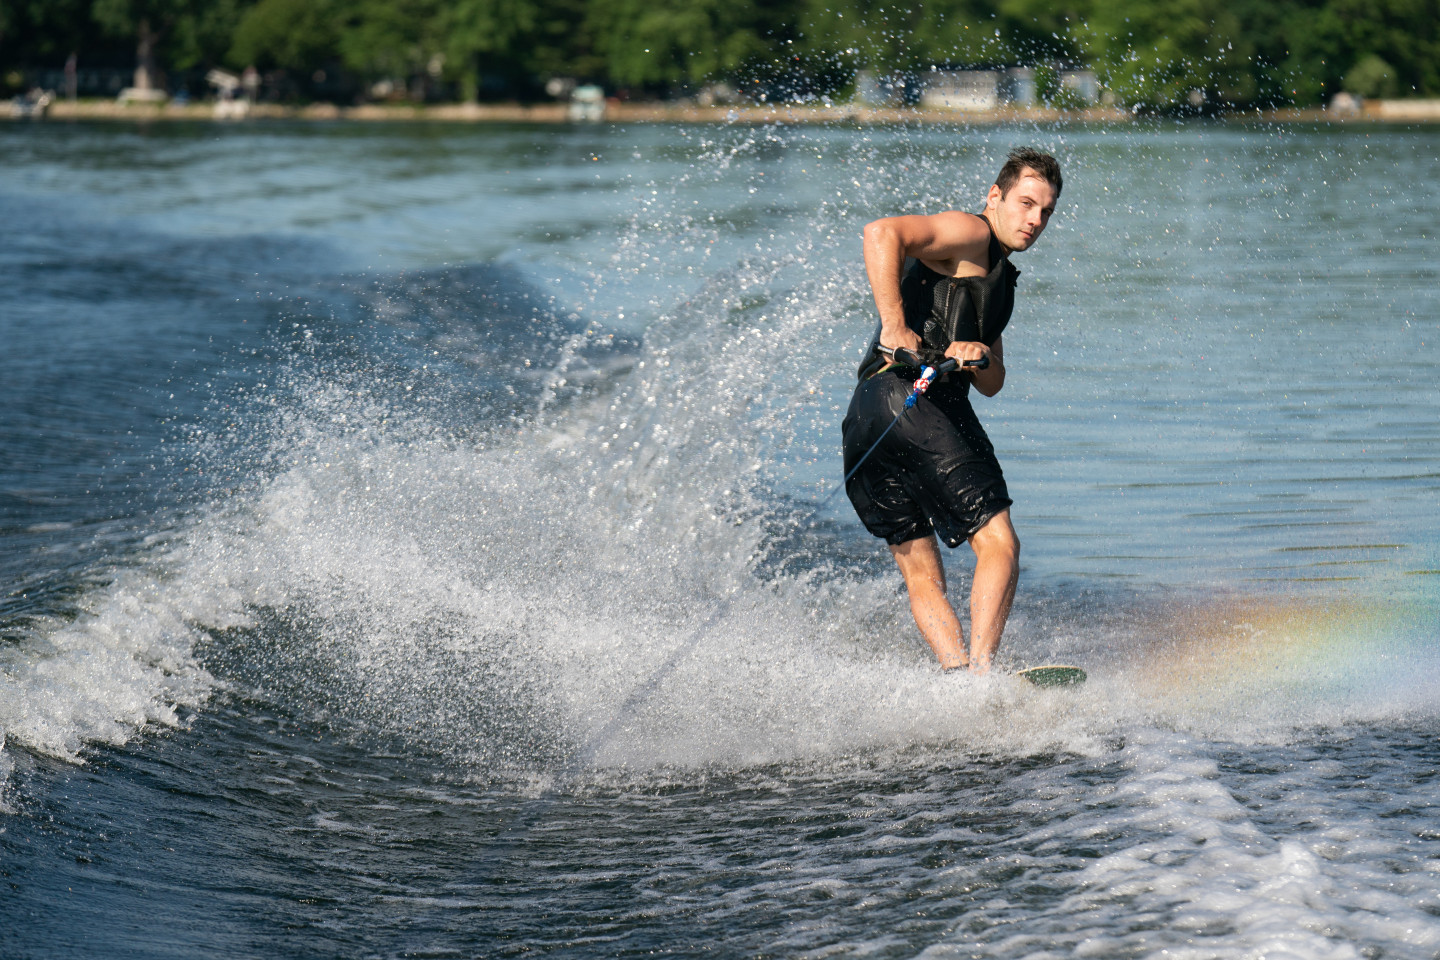 A water skiier spins around on the water.